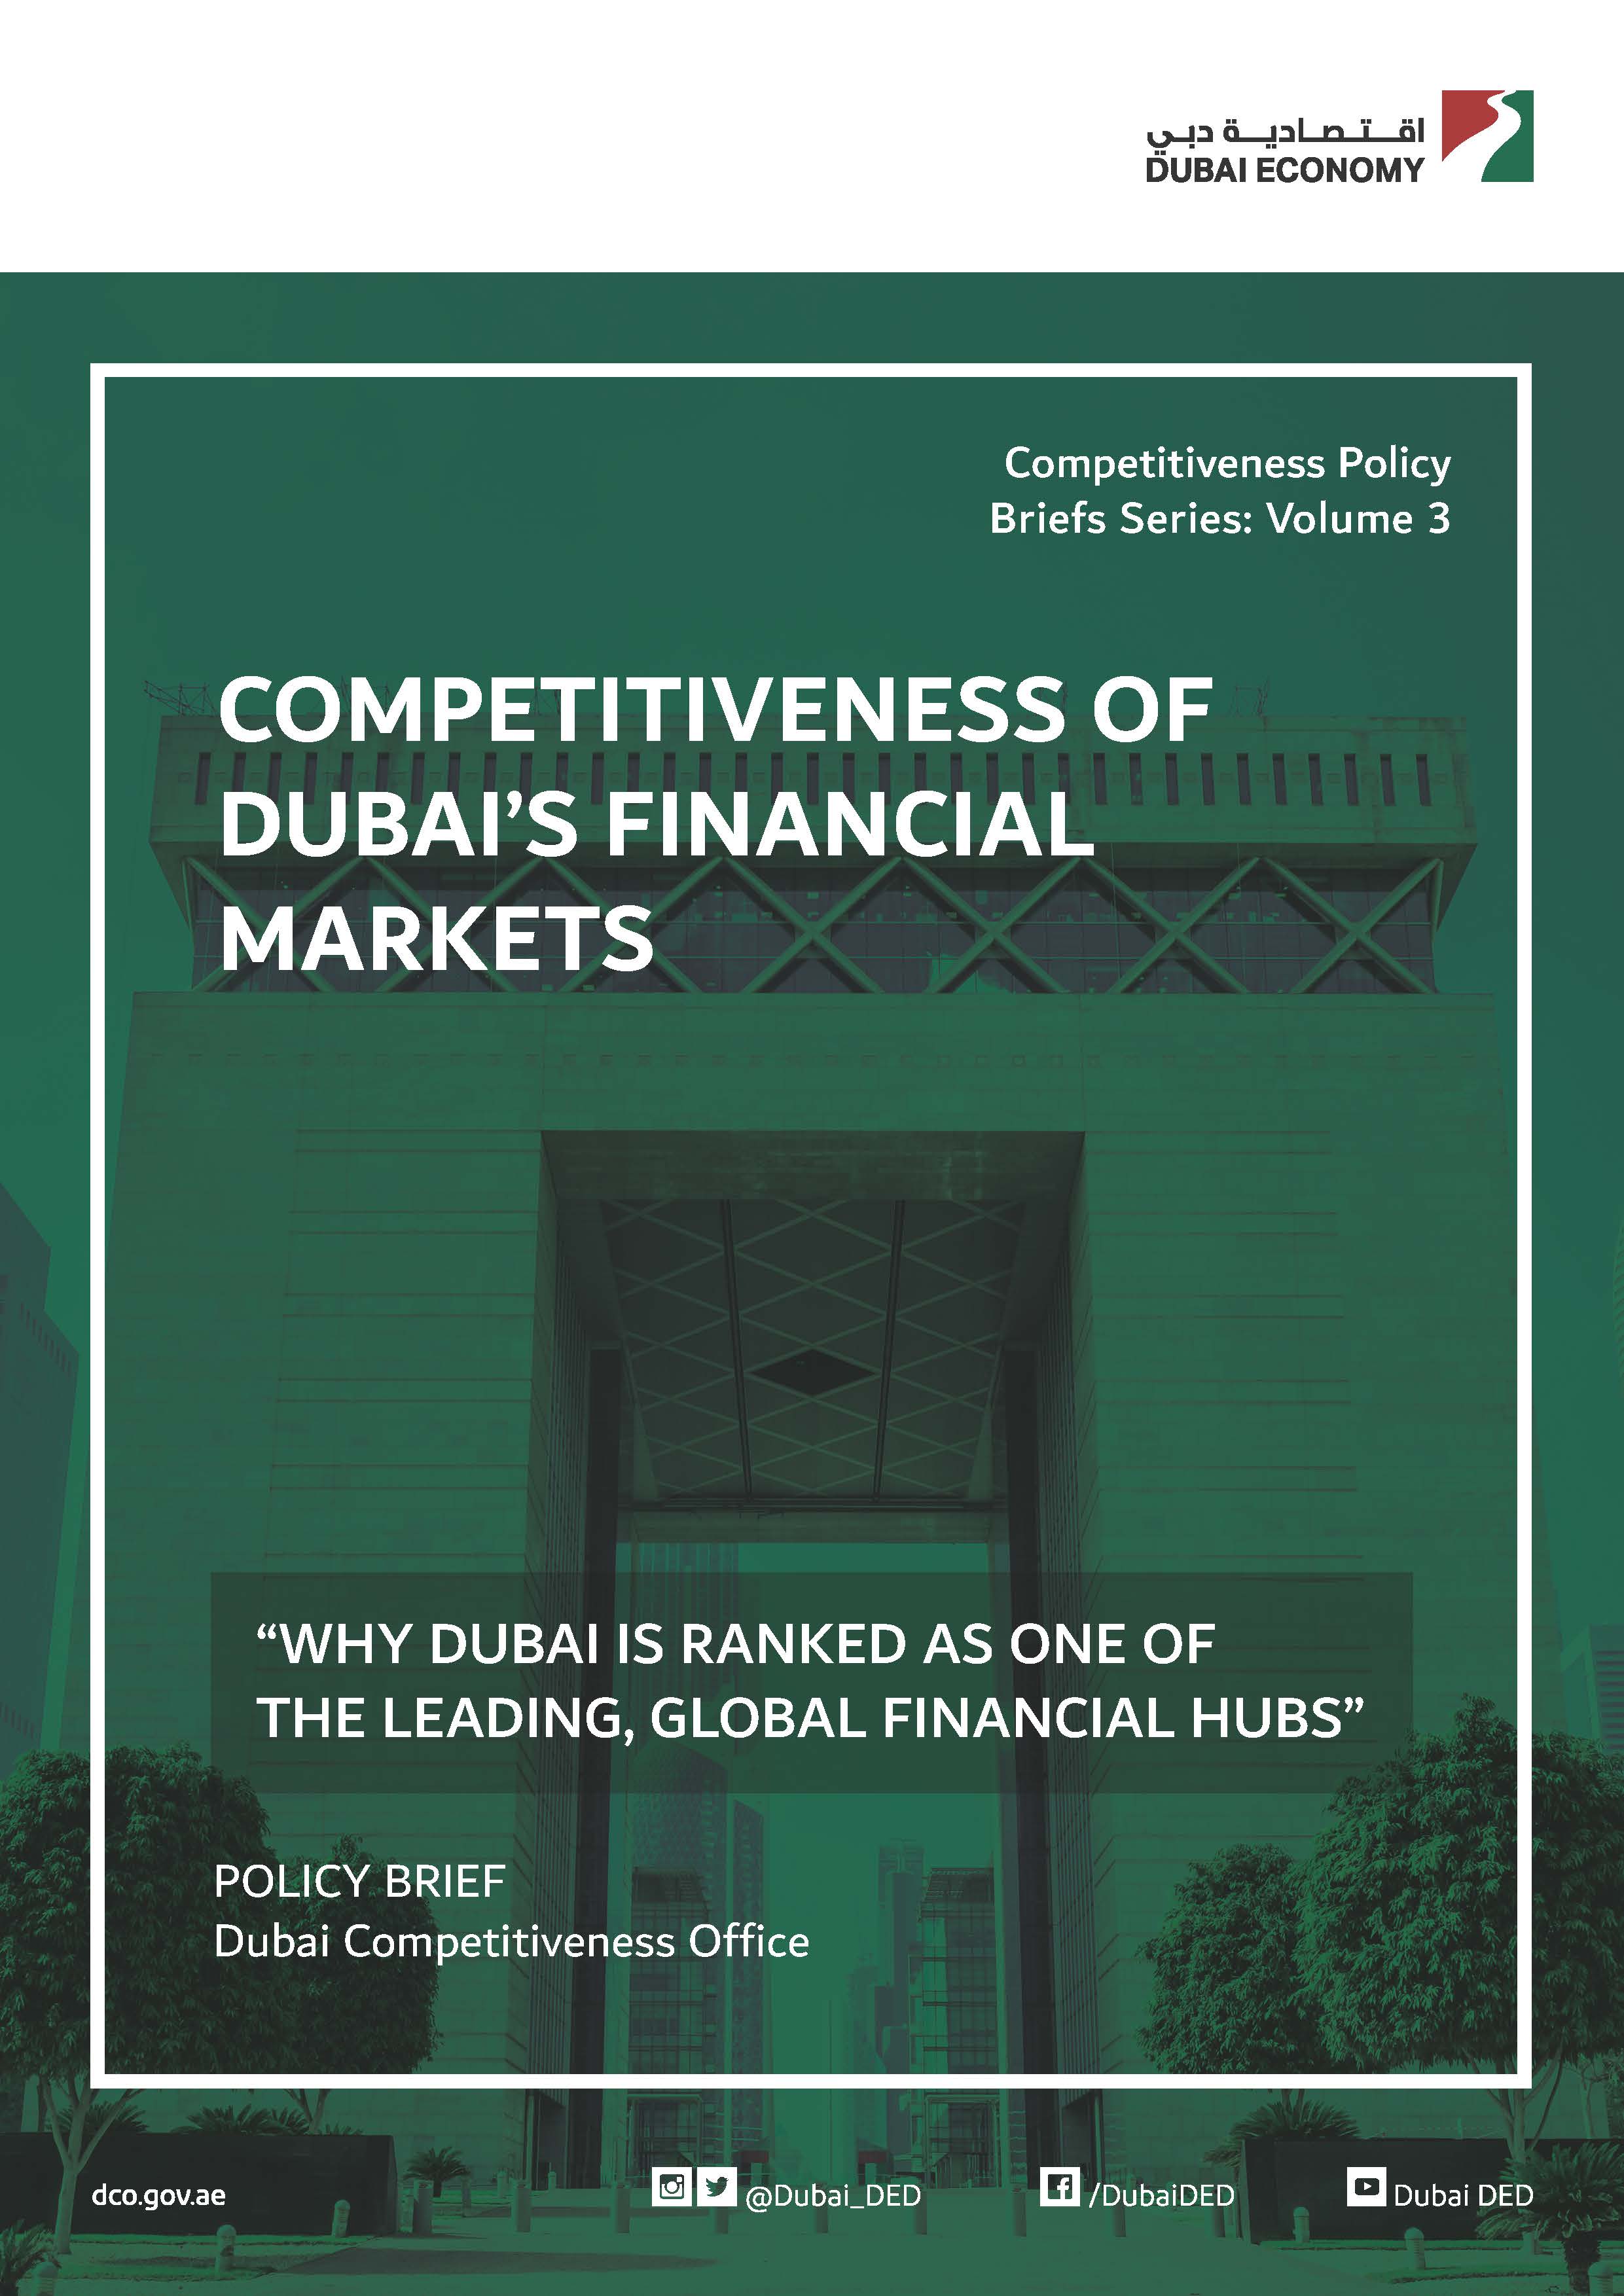 The “Competitiveness Of Dubai’s Financial Markets